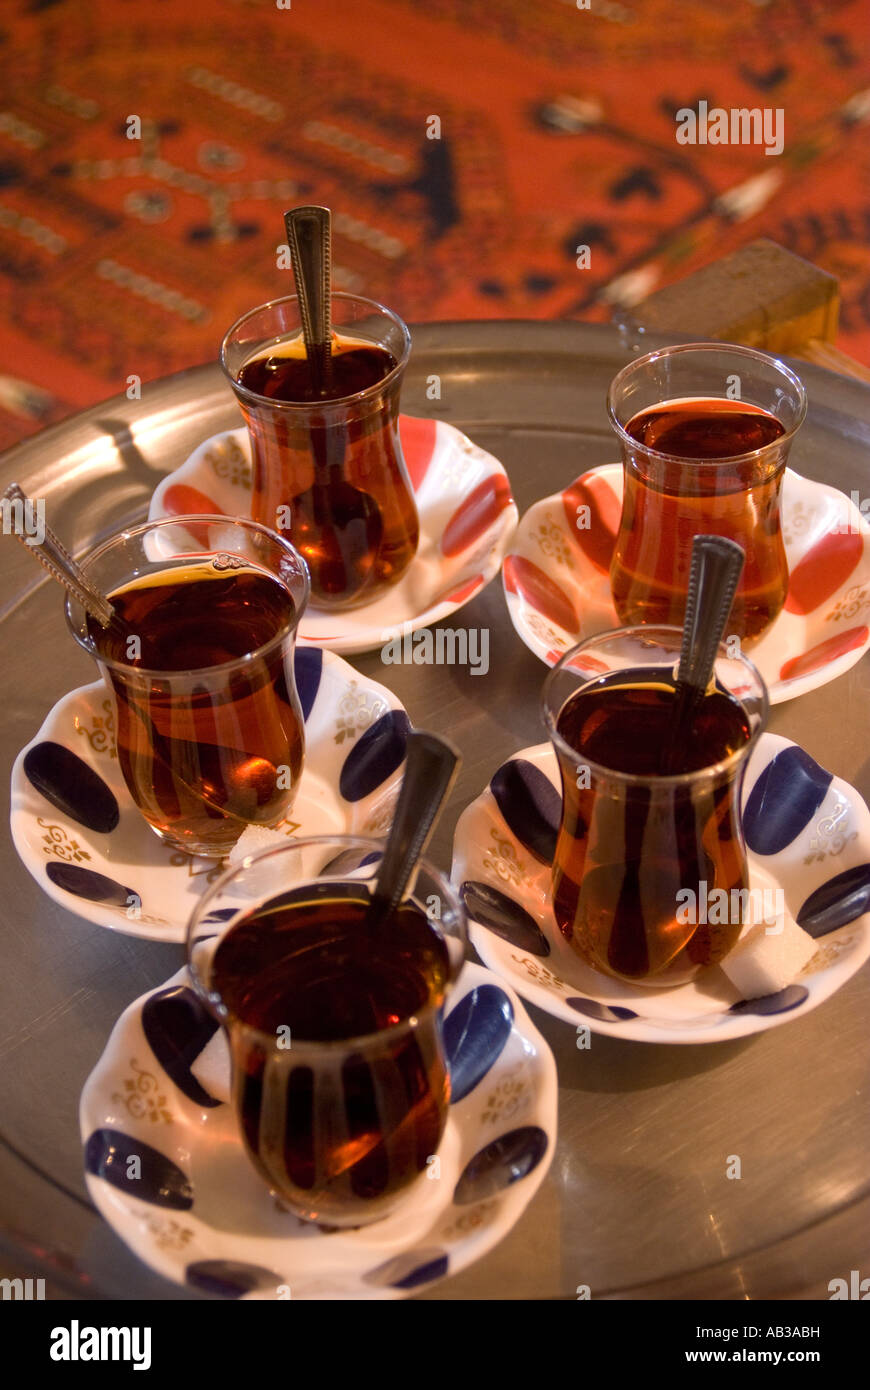 https://c8.alamy.com/comp/AB3ABH/turkish-tea-turkey-AB3ABH.jpg